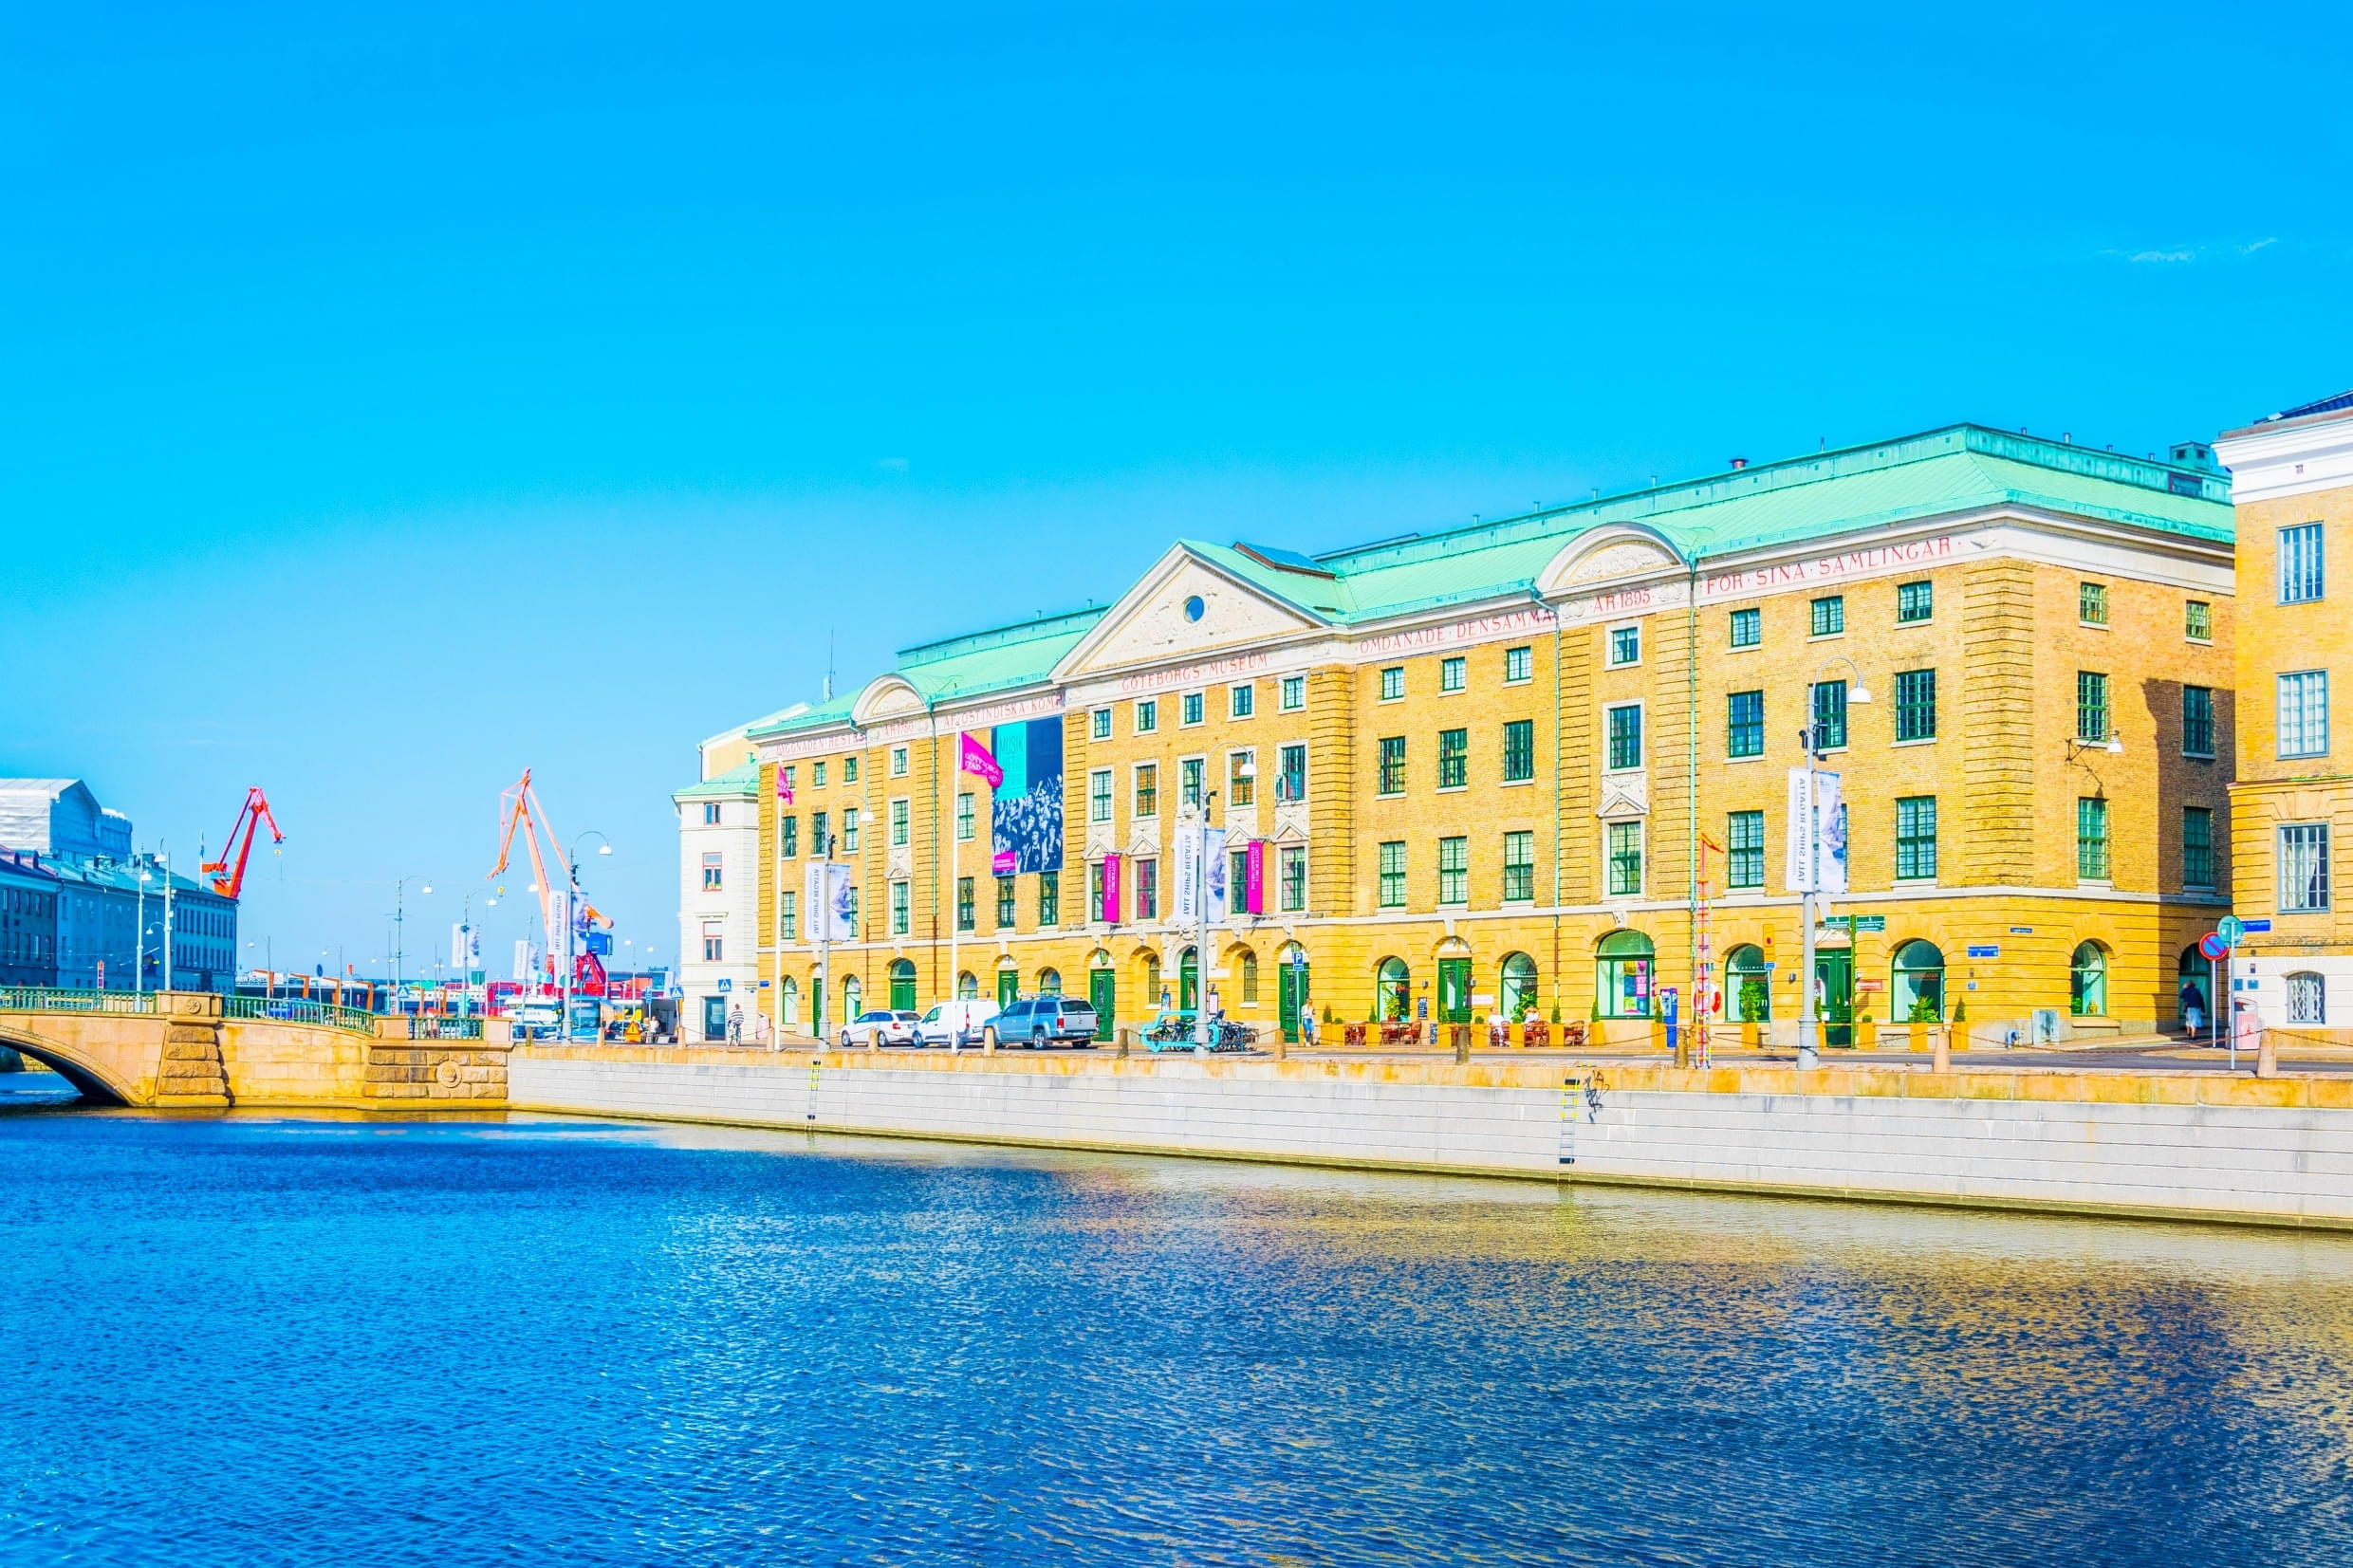 Gothenburg City Museum Overview